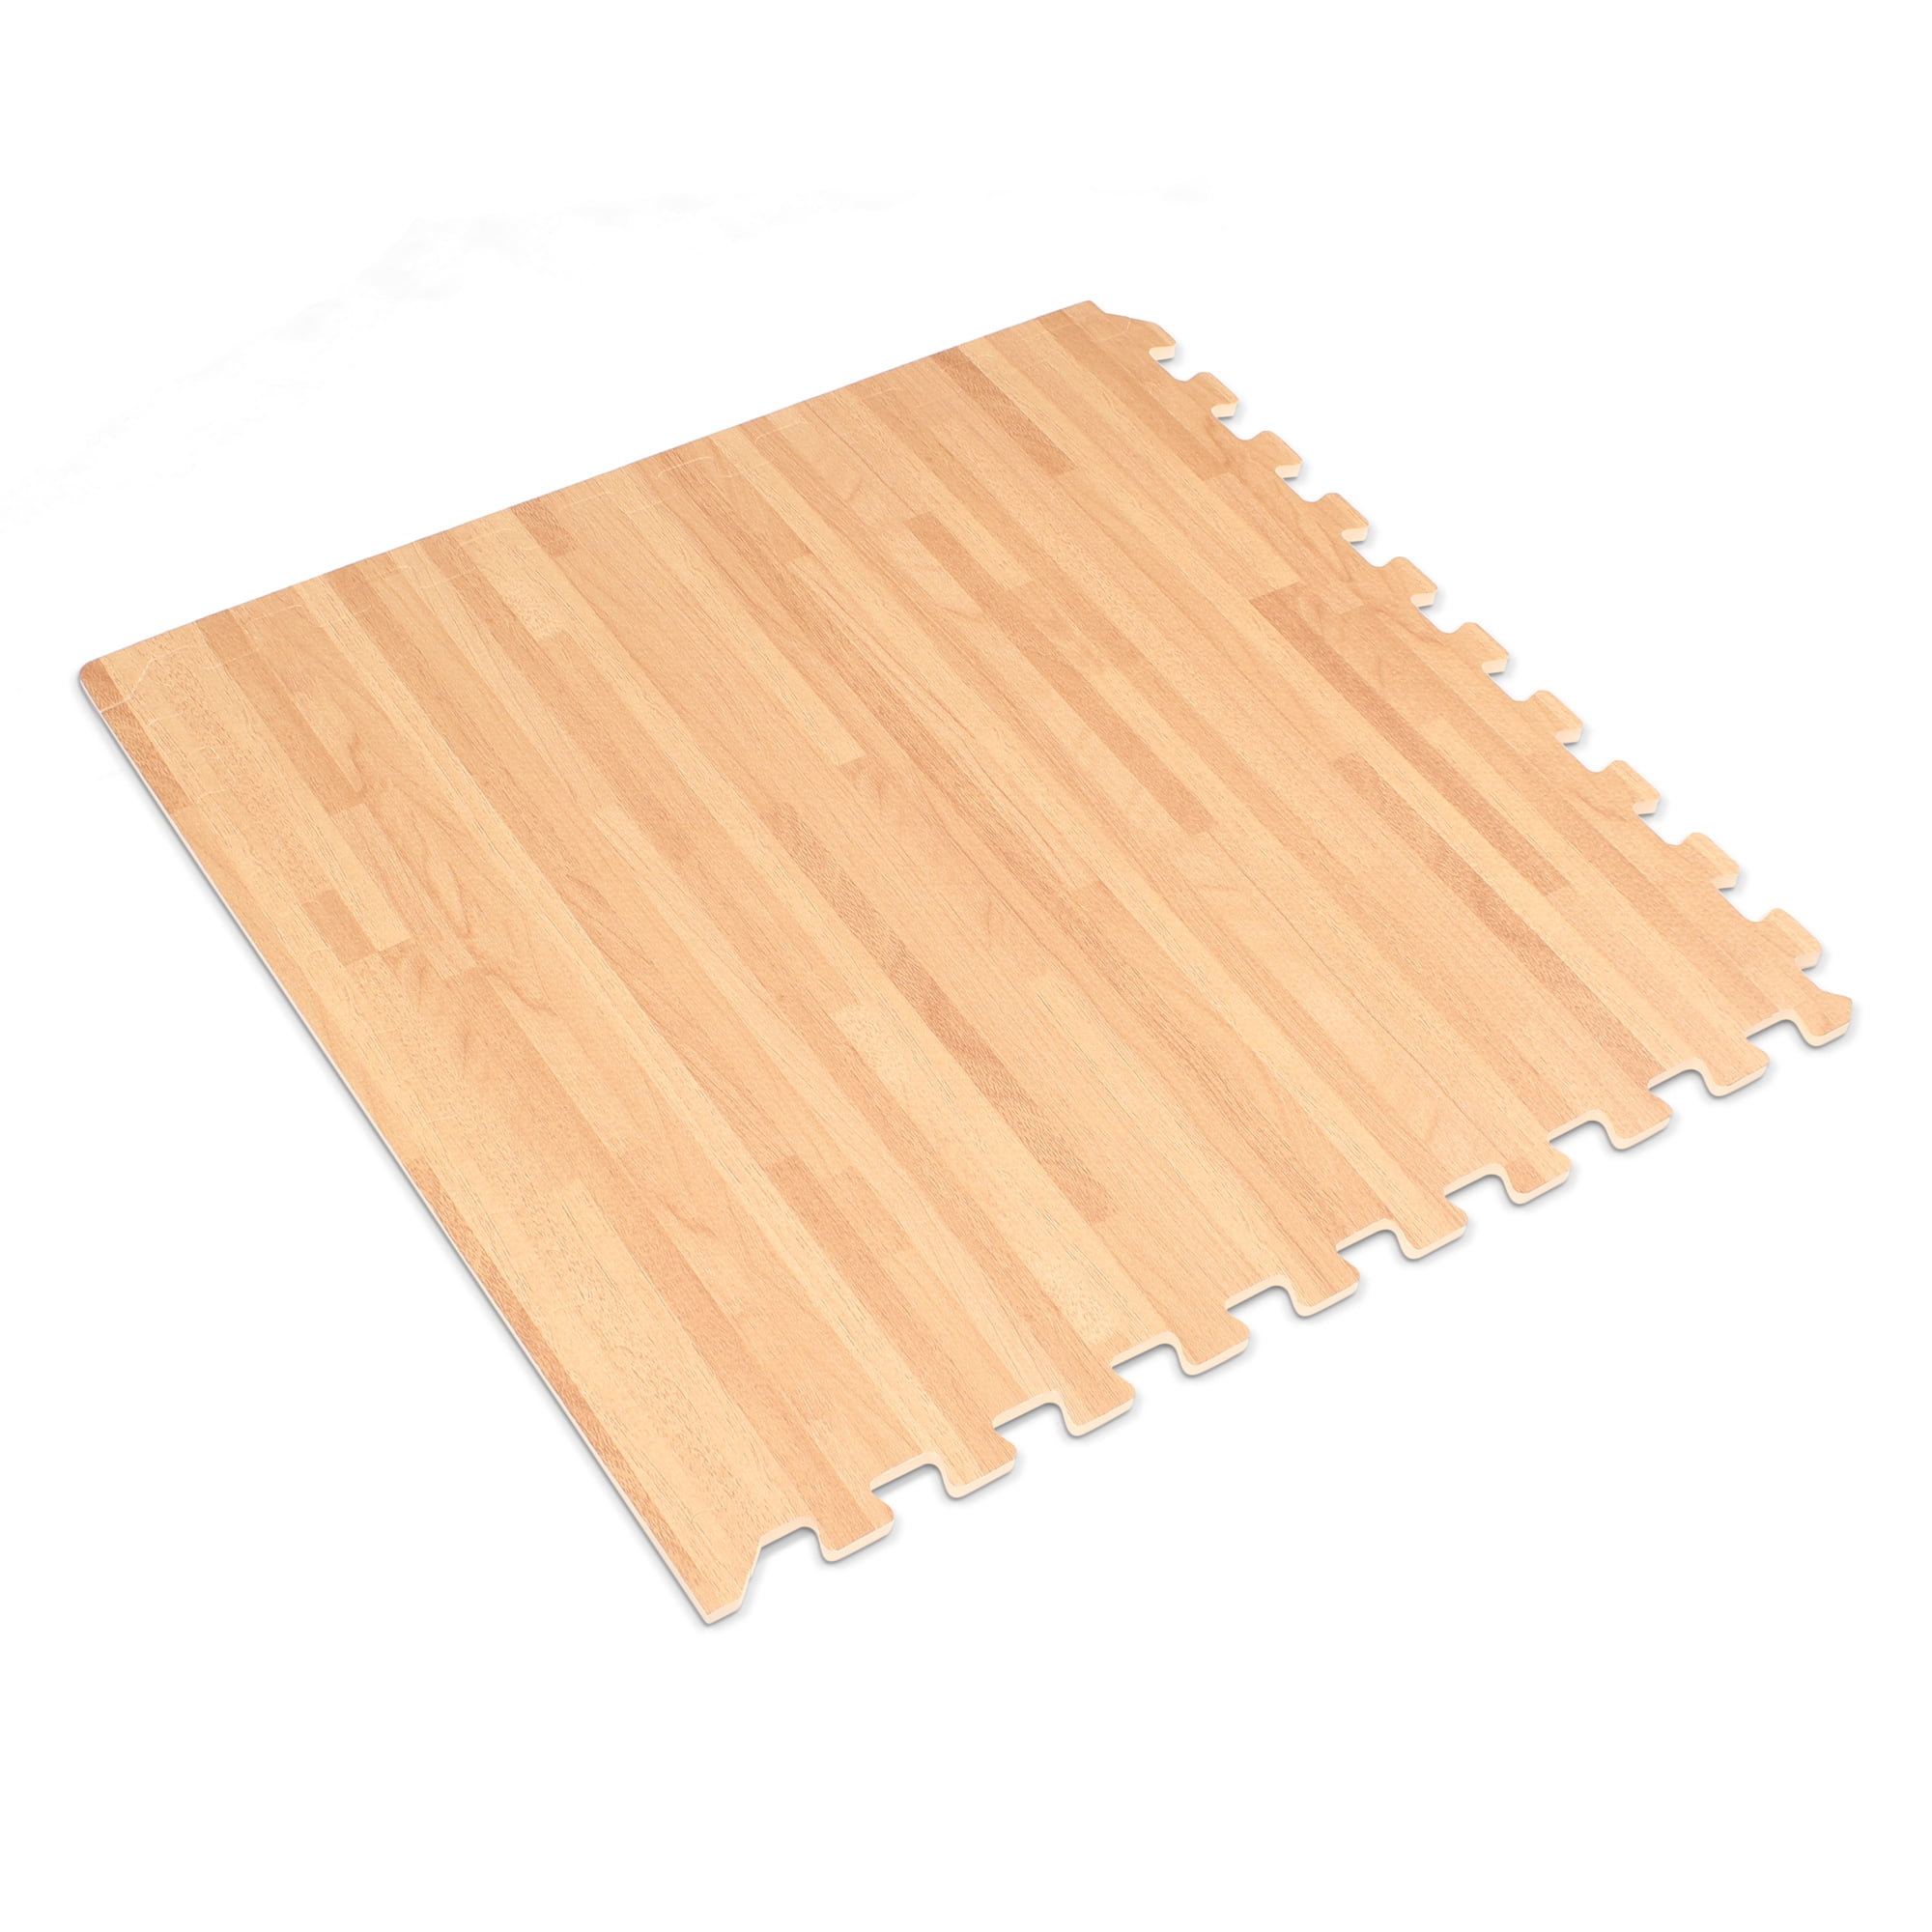 Premium Wood Grain Interlocking Foam Floor Mats Anti-Fatigue Flooring Forest Floor 3//8 Inch Thick Printed Foam Tiles